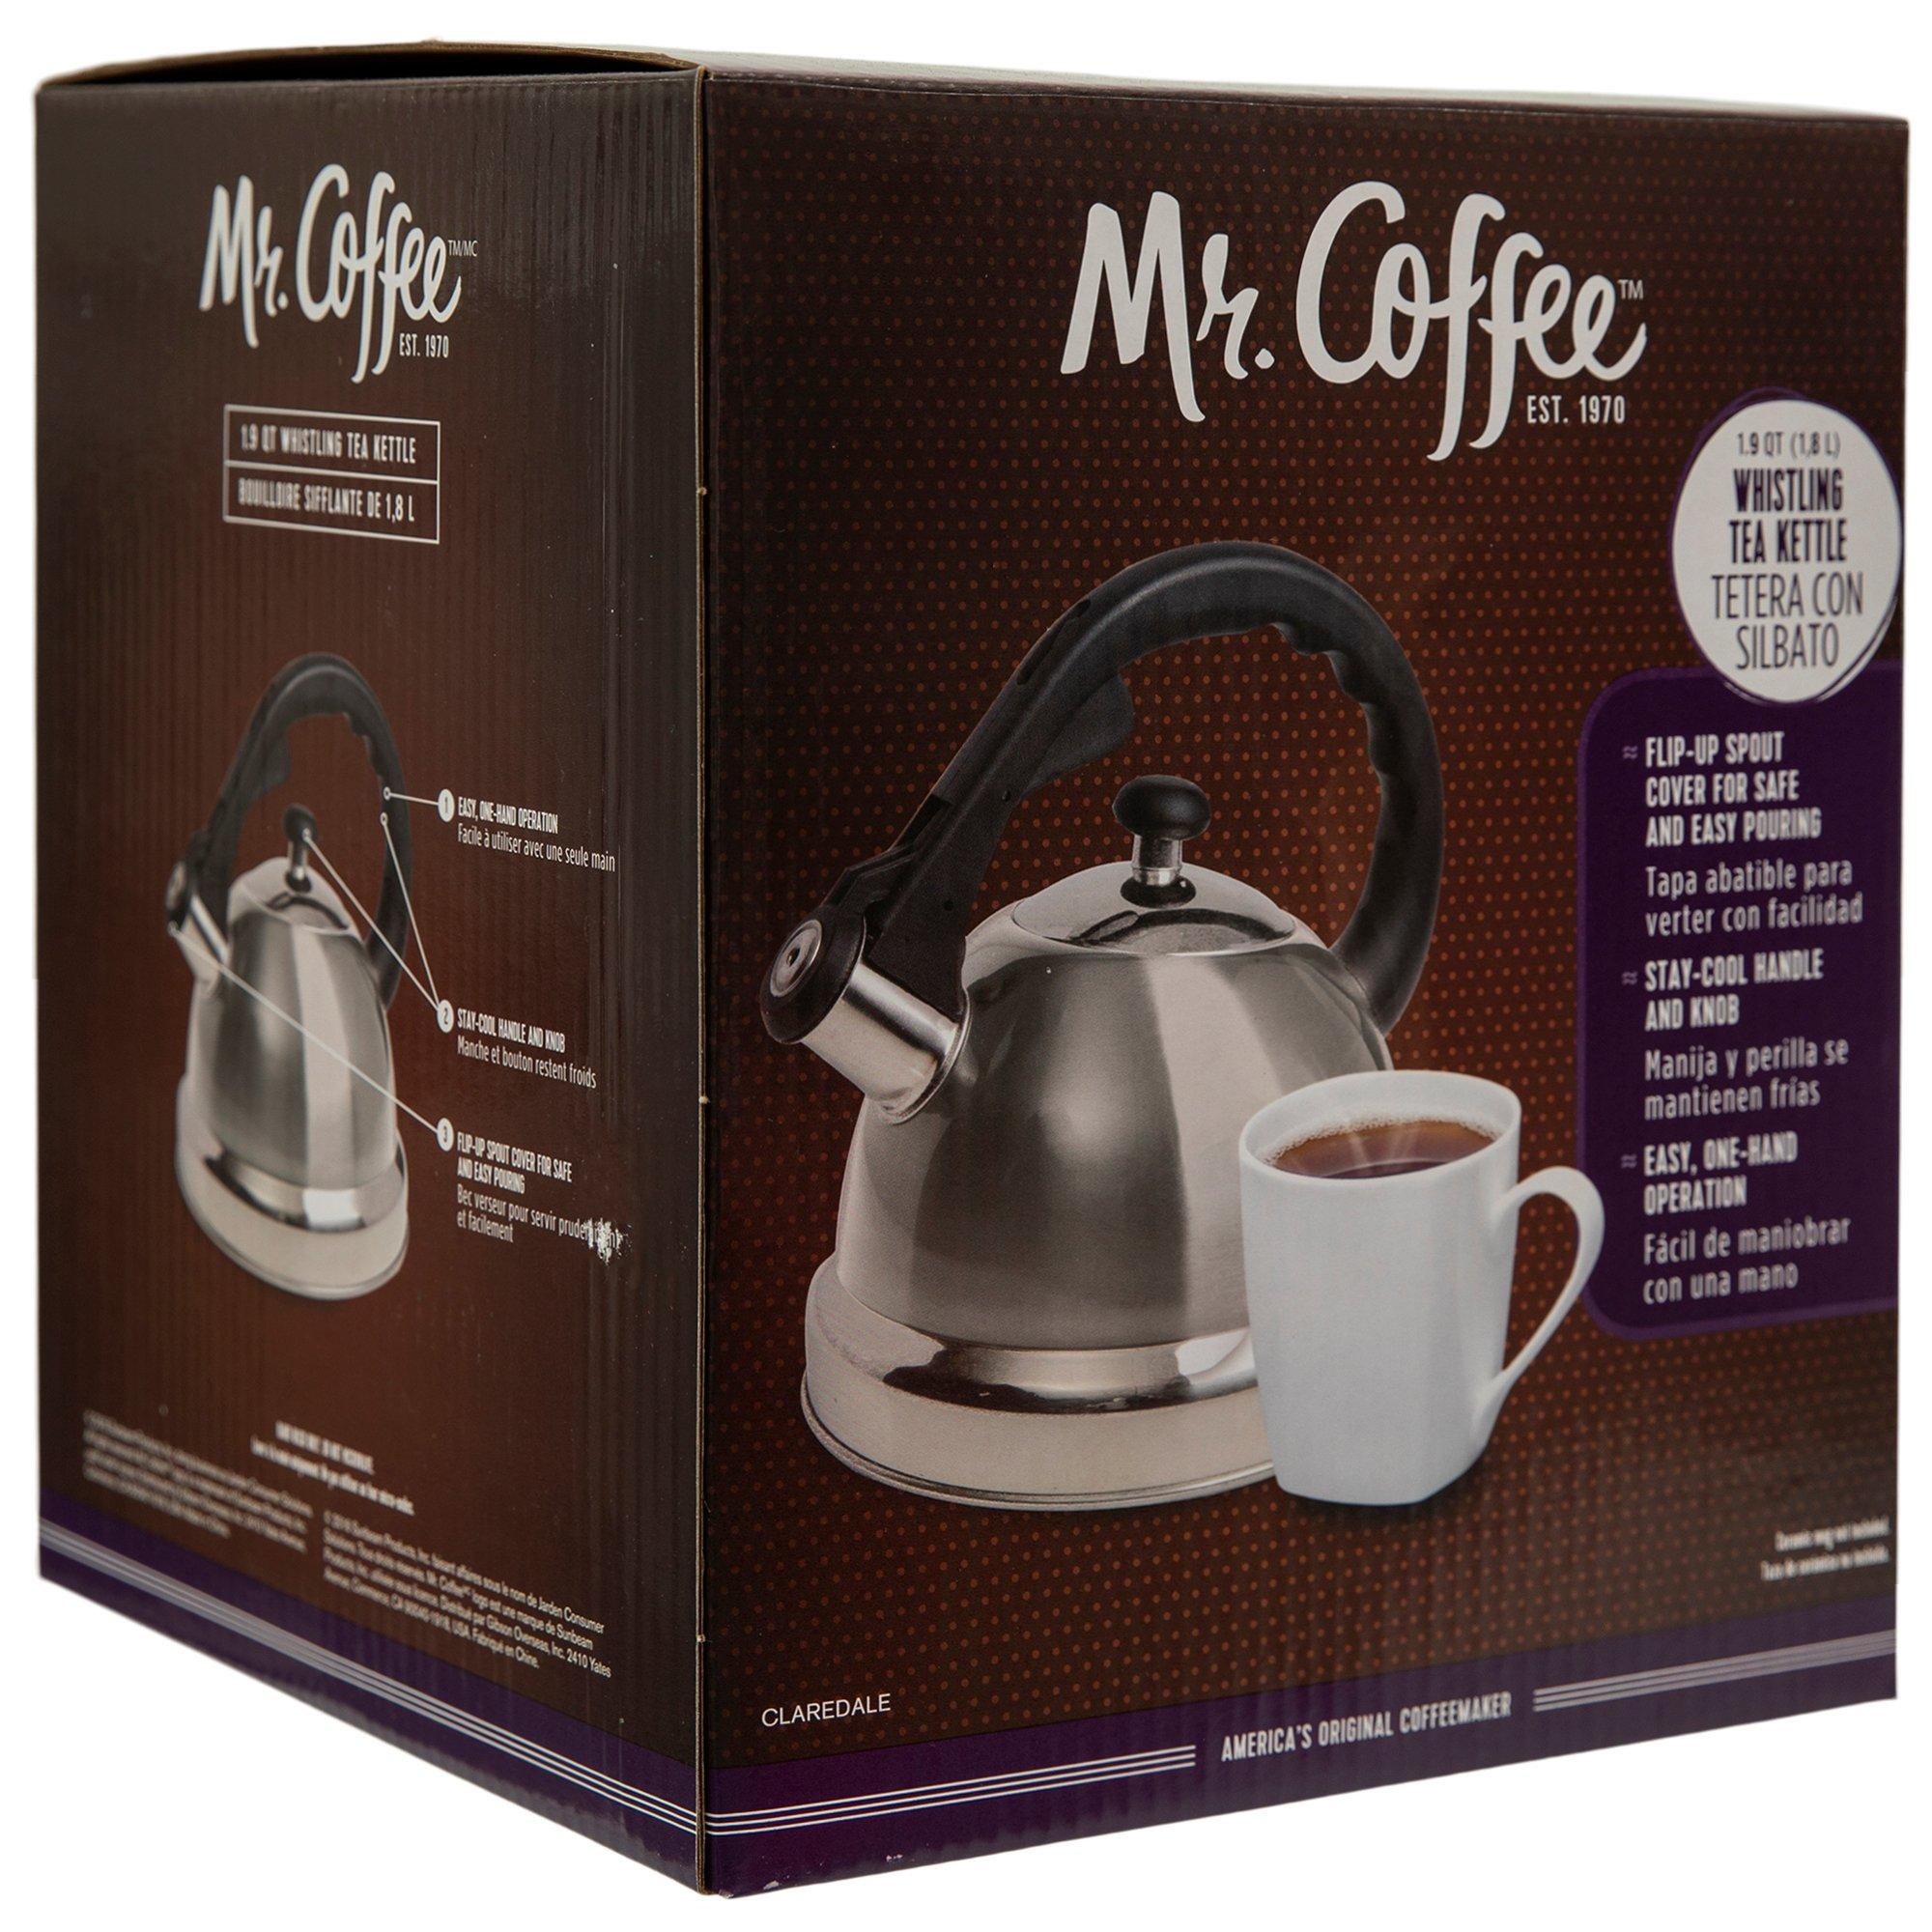 Sunbeam Mr. Coffee Mug Warmer For Use With Any Hot Beverage NEW